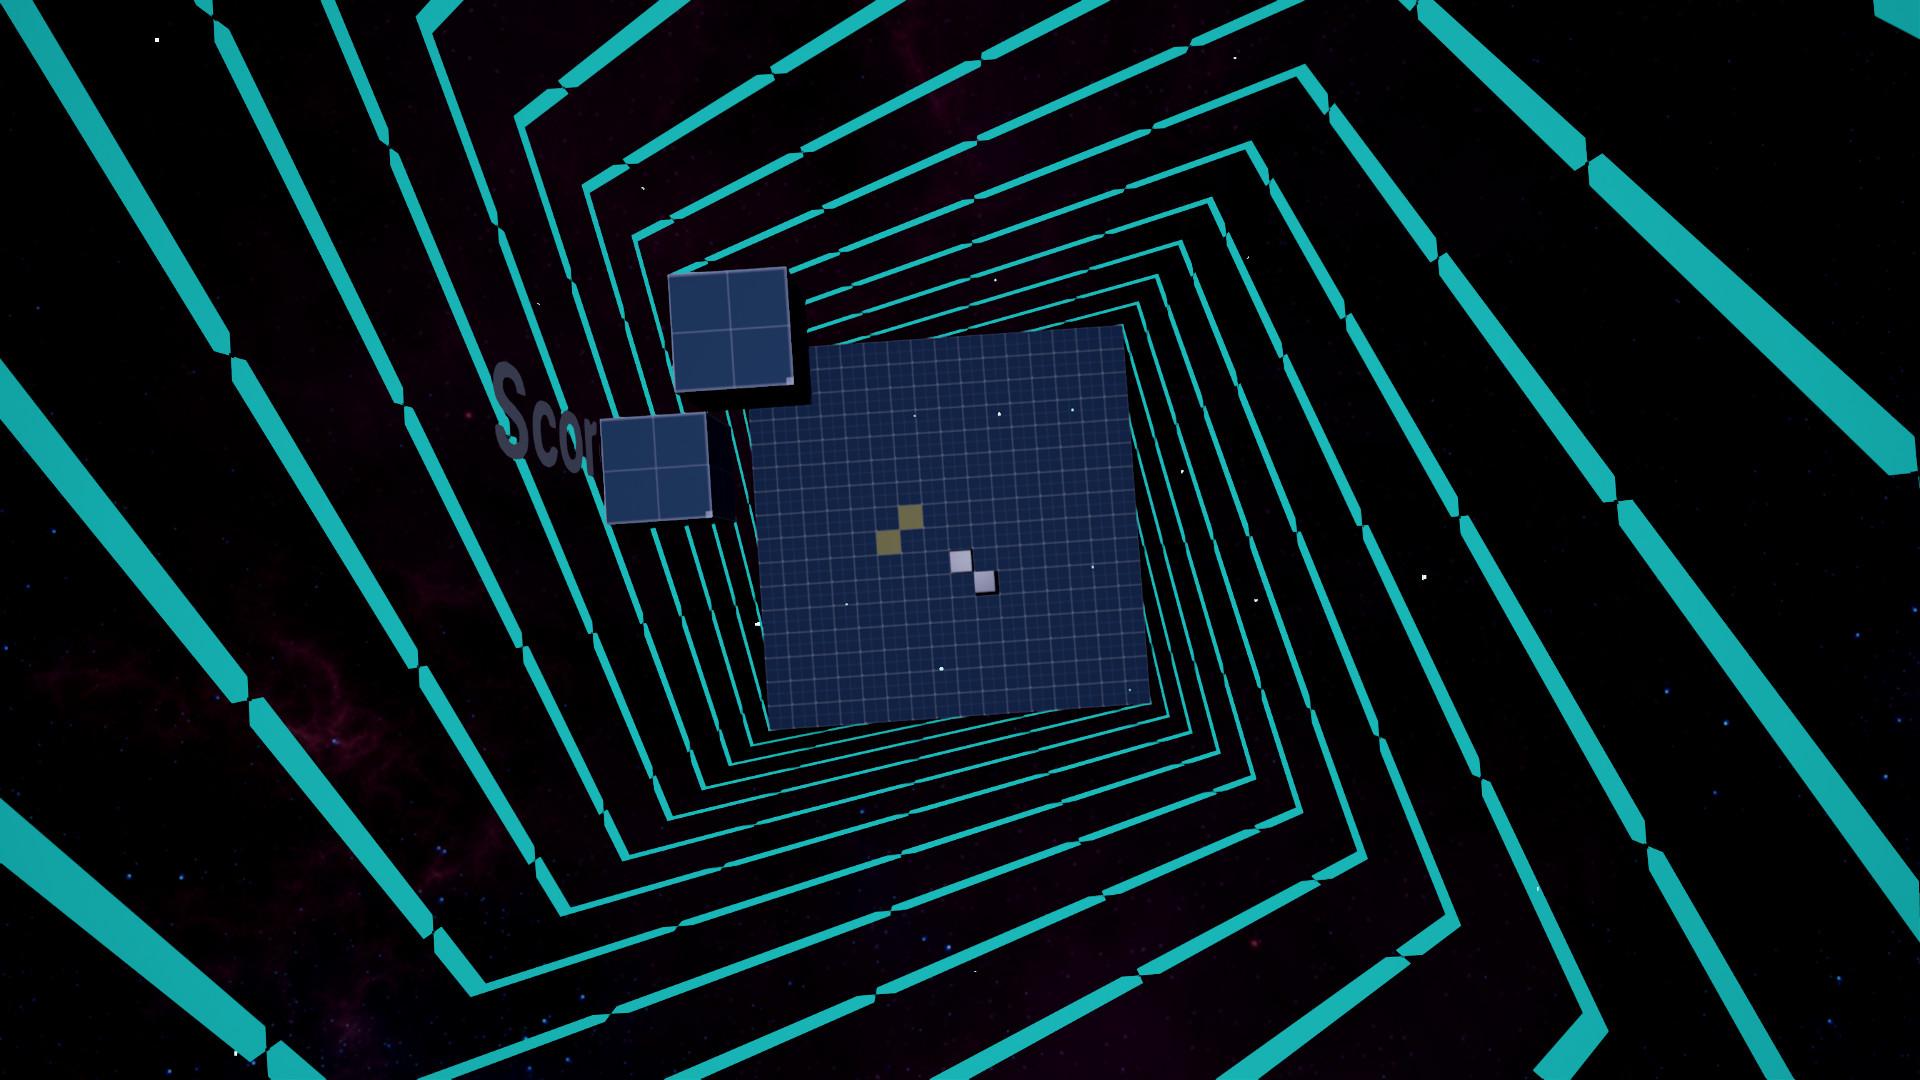 Screenshot №2 from game ThrounnelVR